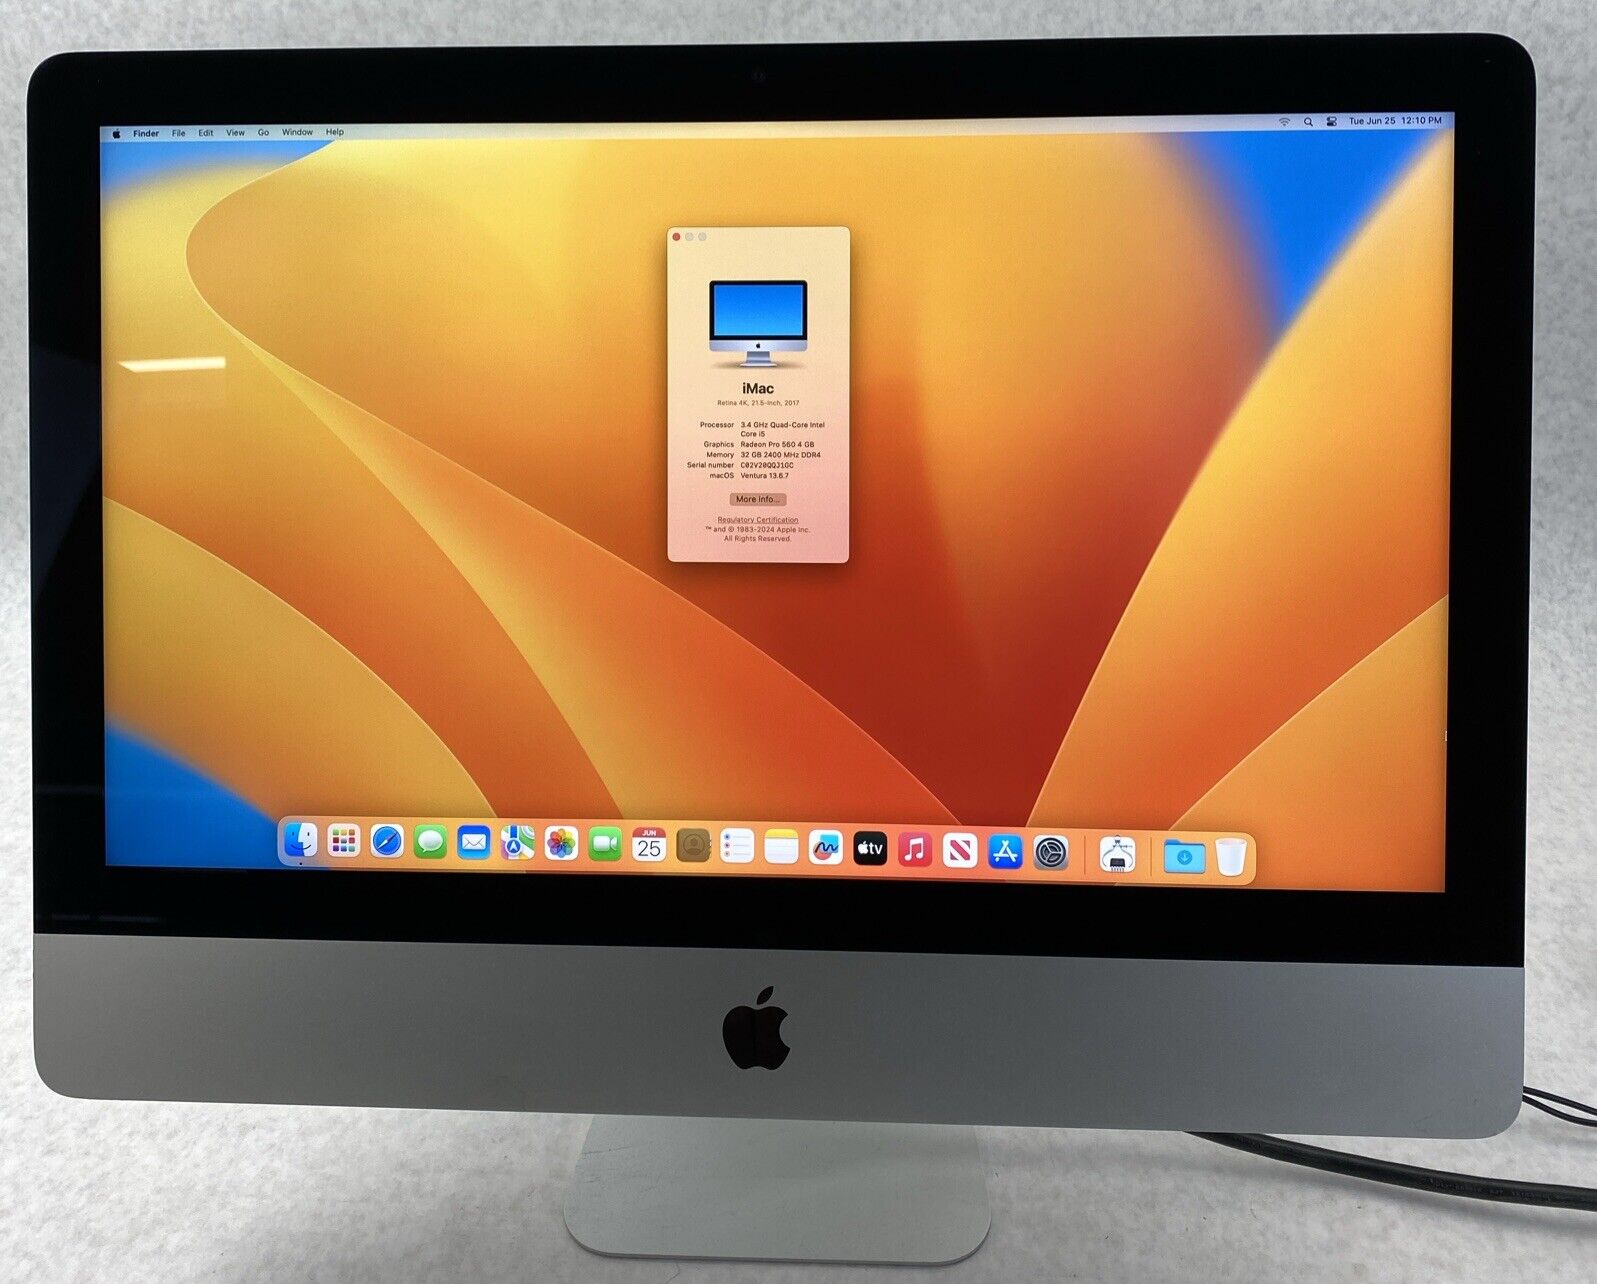 Apple A1418 iMac 21